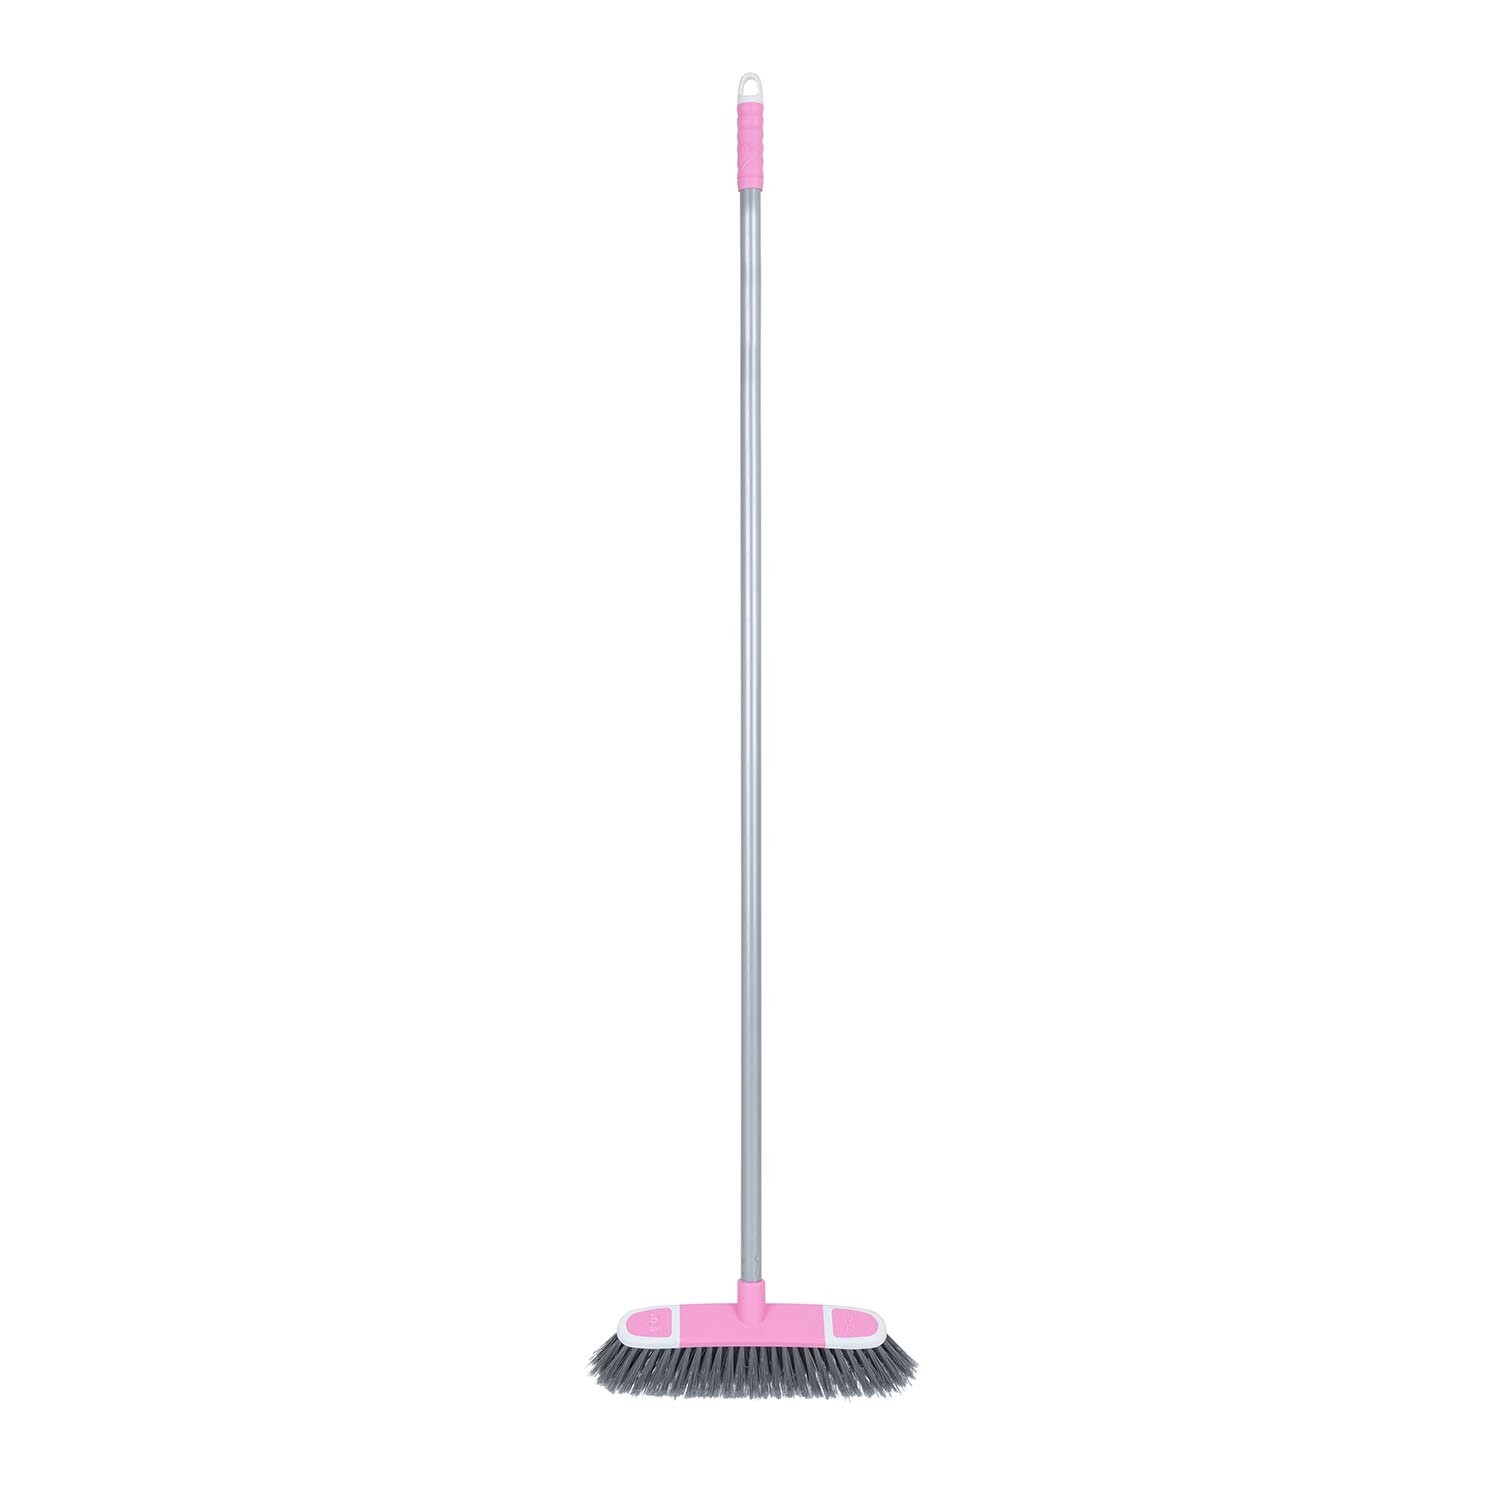 Flash Broom - Pink Image 1